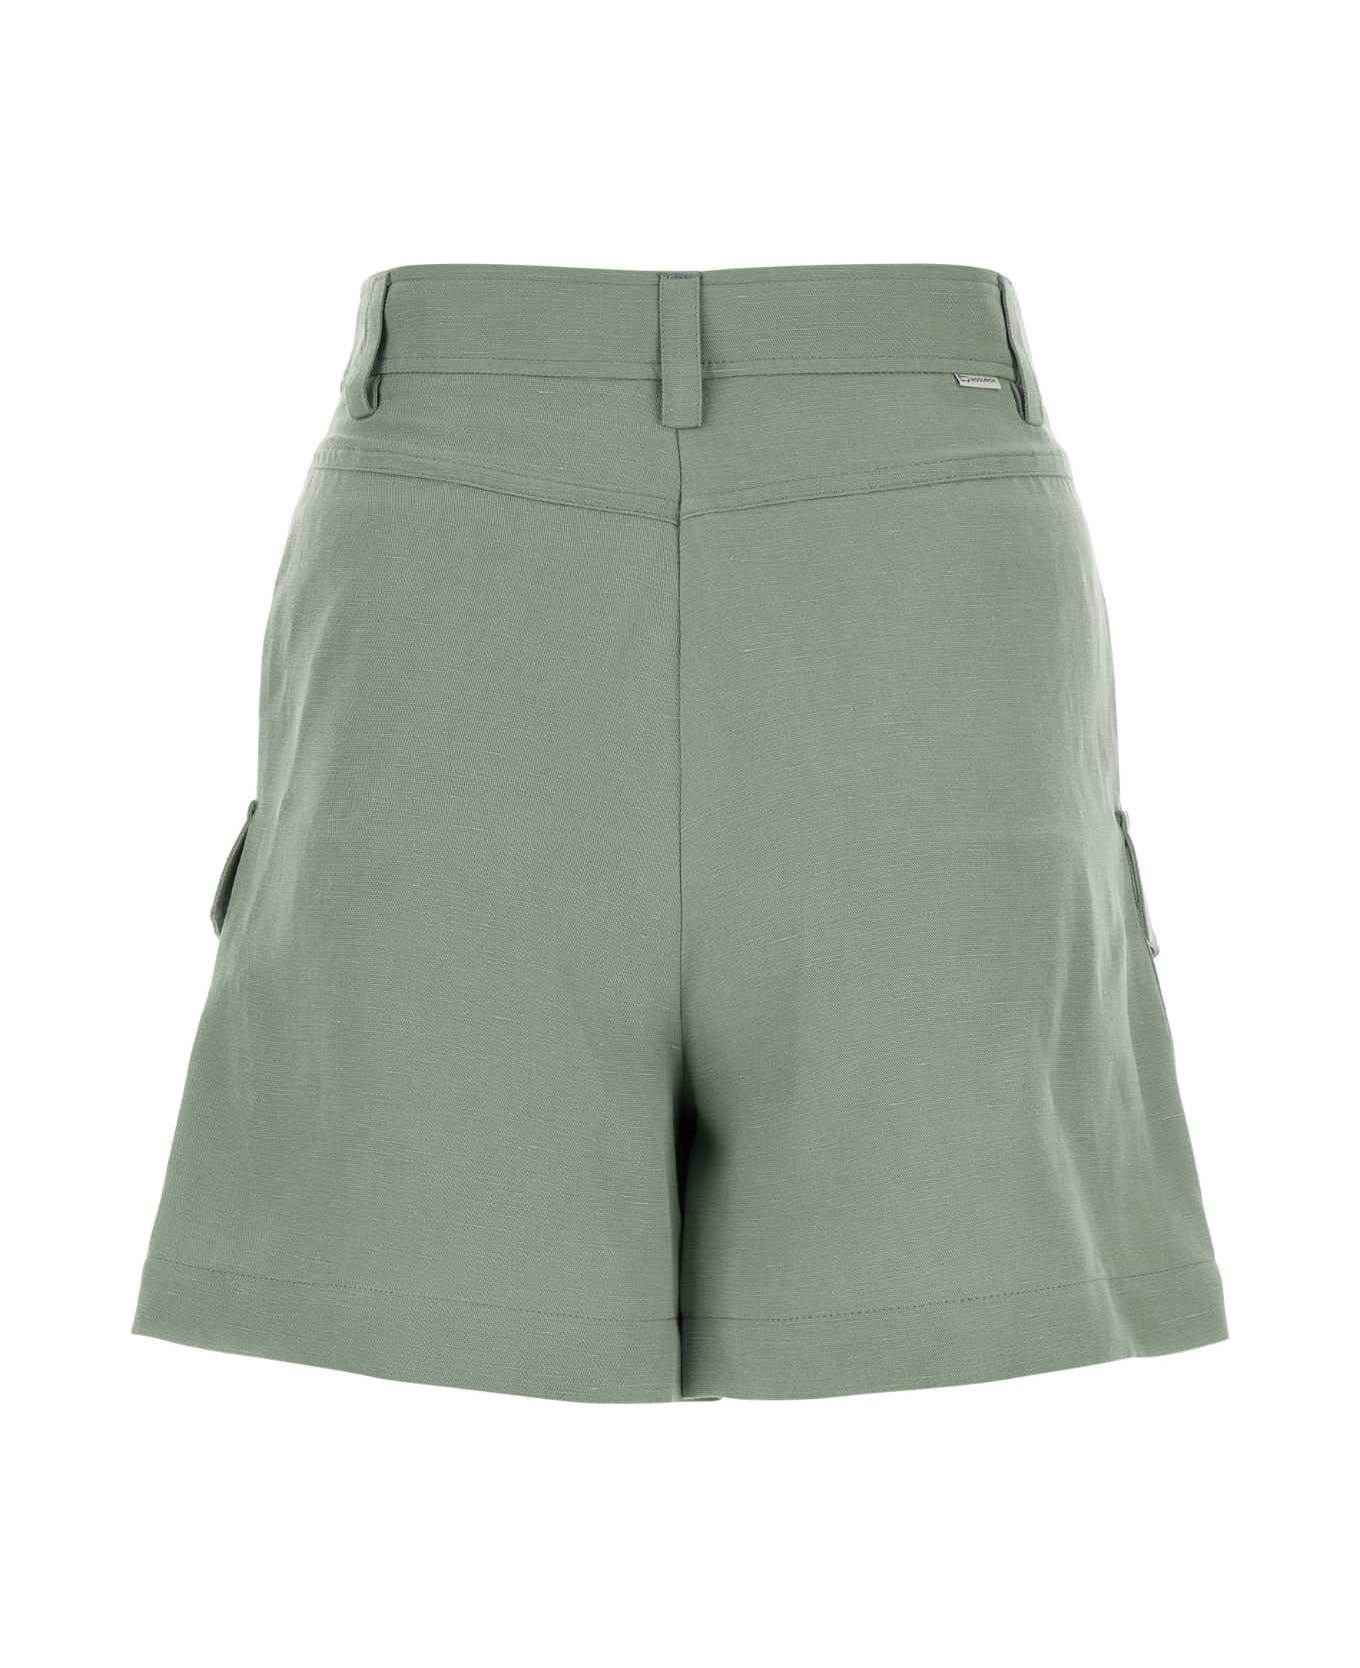 Woolrich Sage Green Viscose Blend Shorts - SAGE